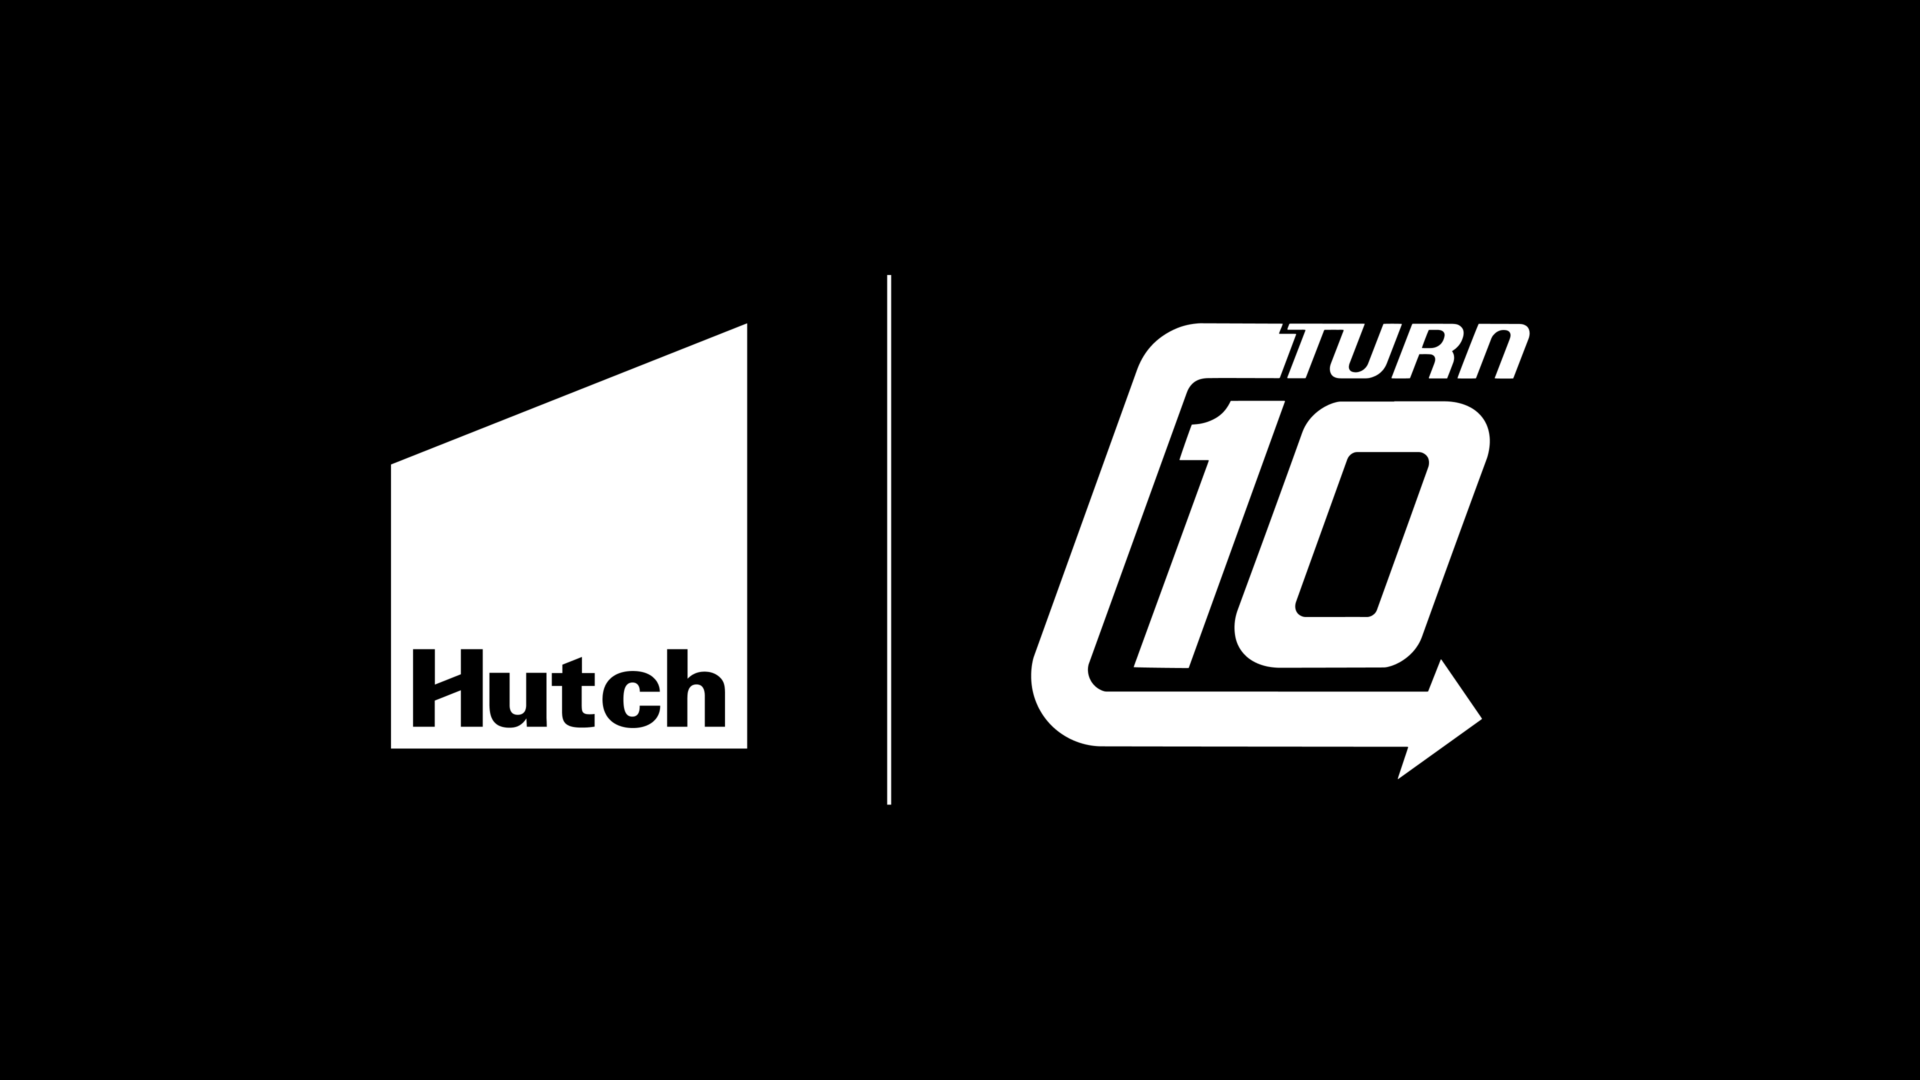 turn_10_x_hutch.jpg